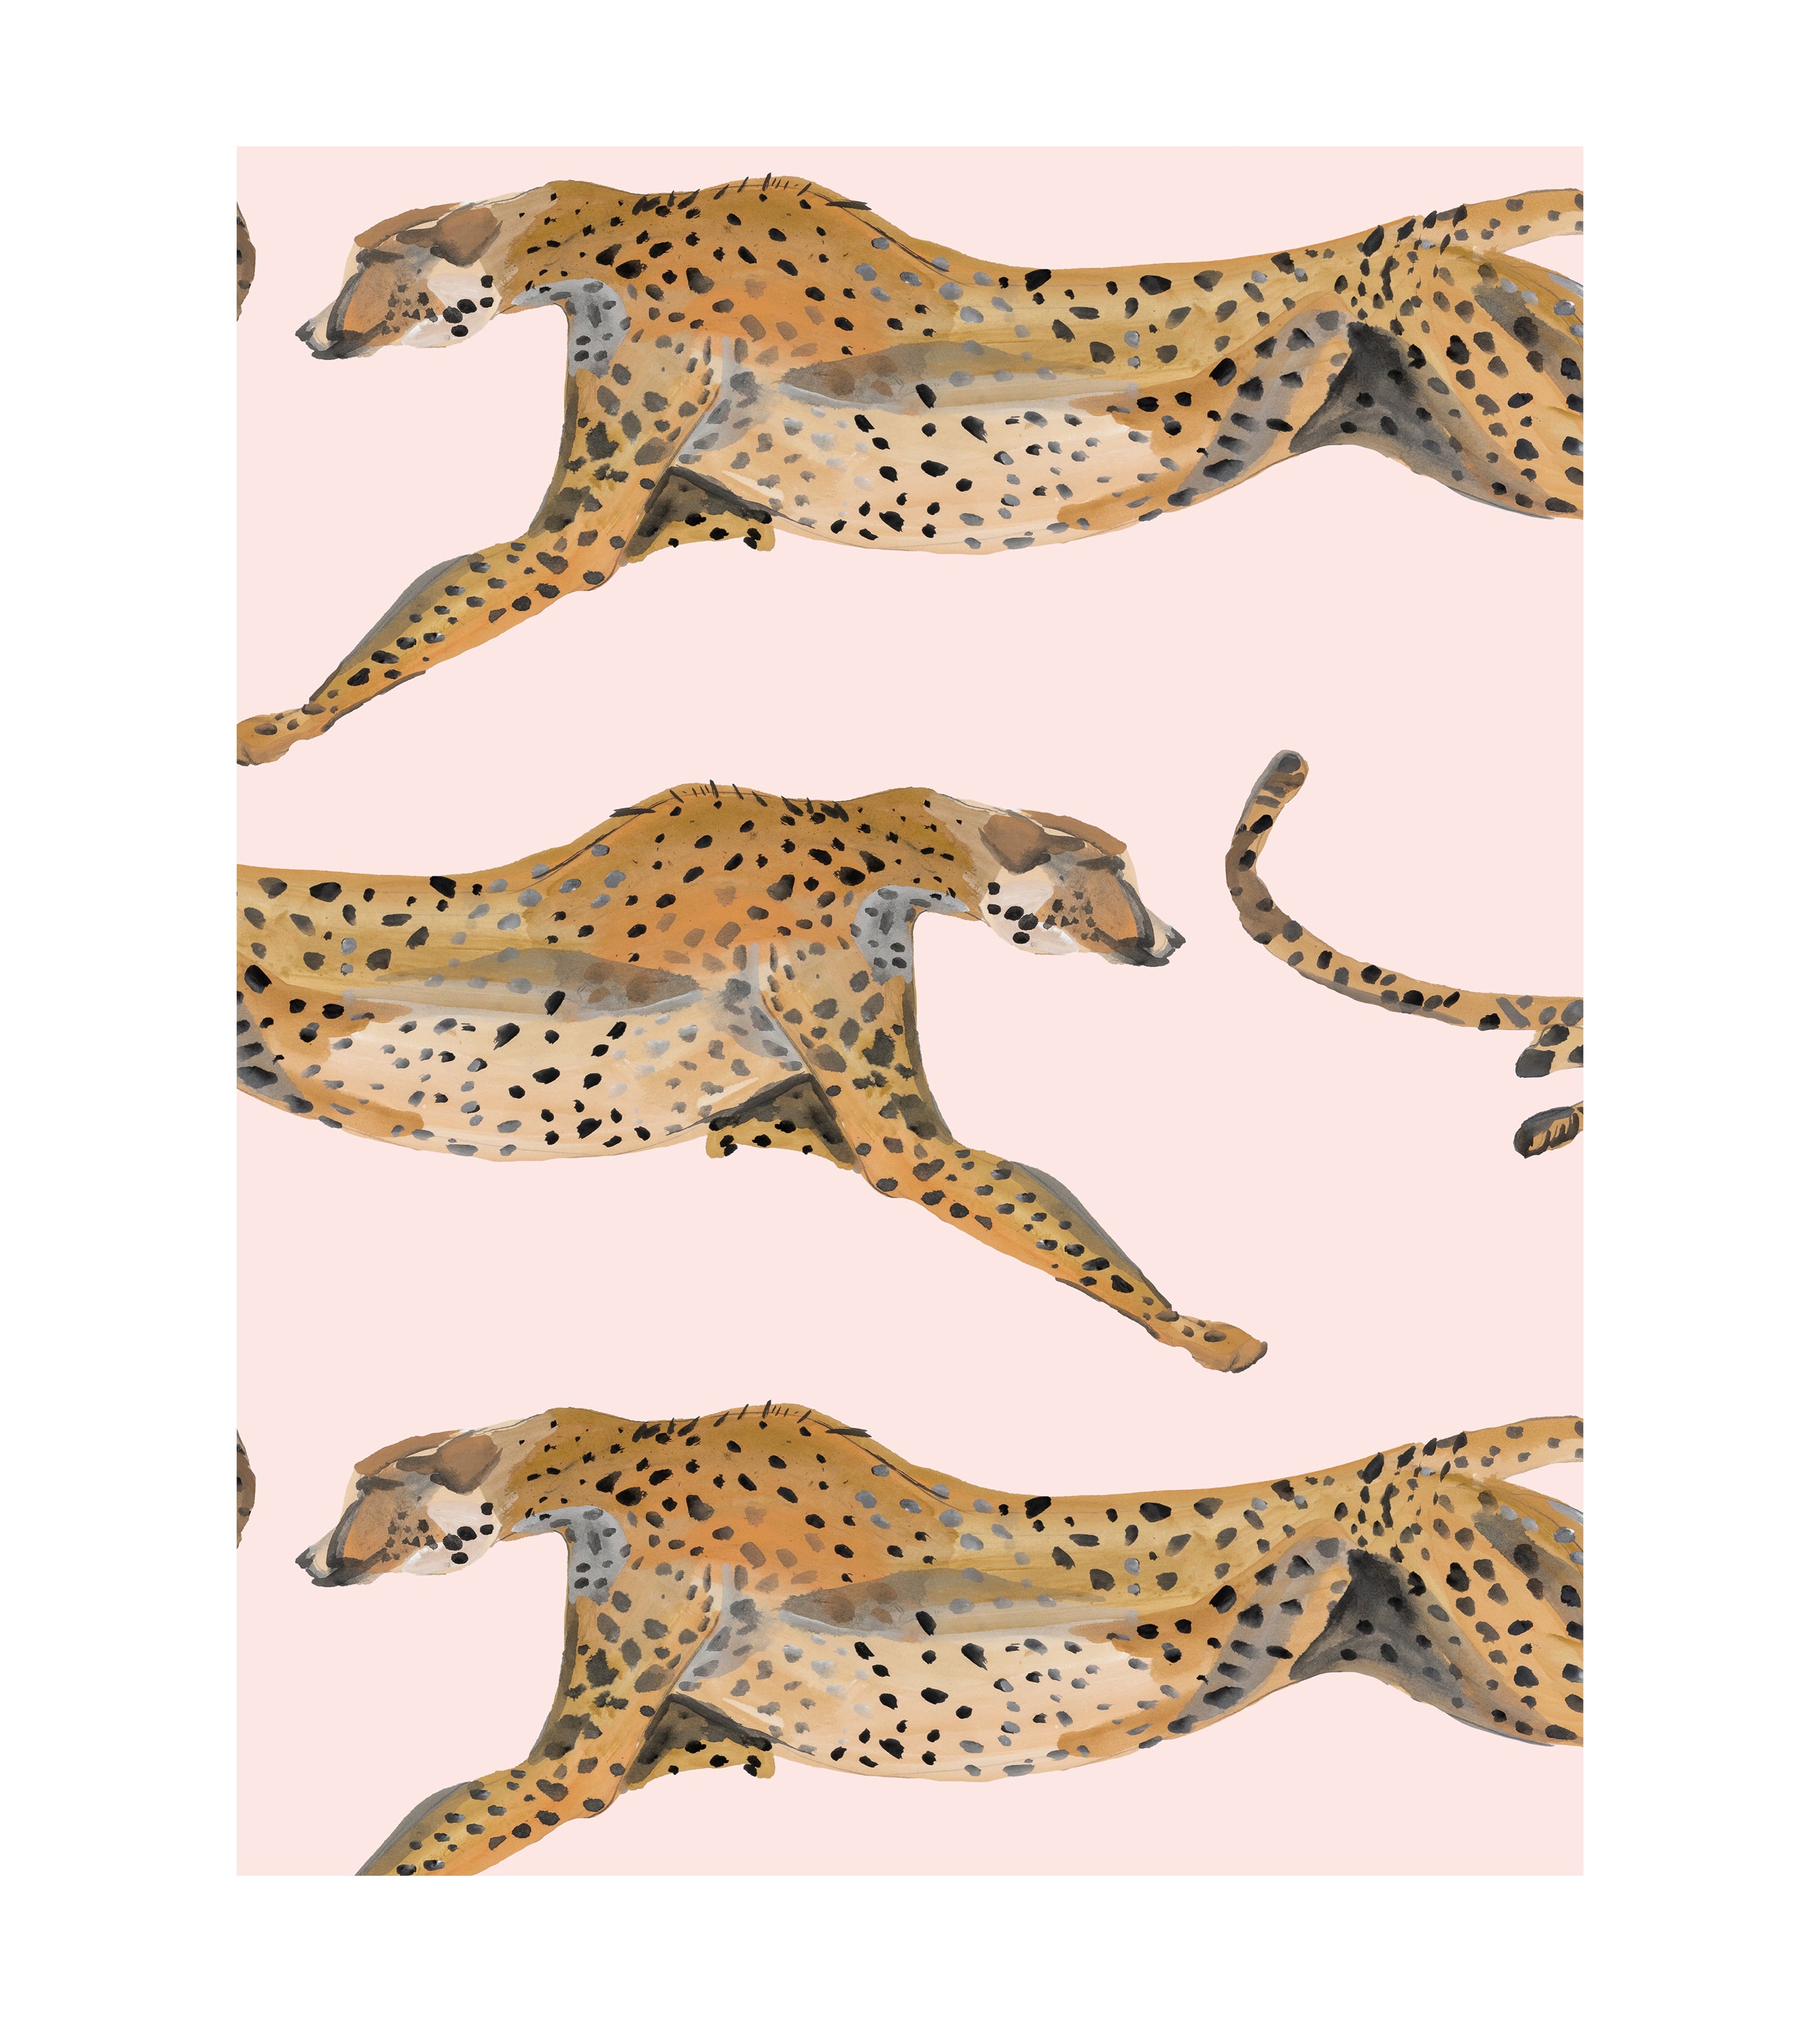 leopard wallpapers